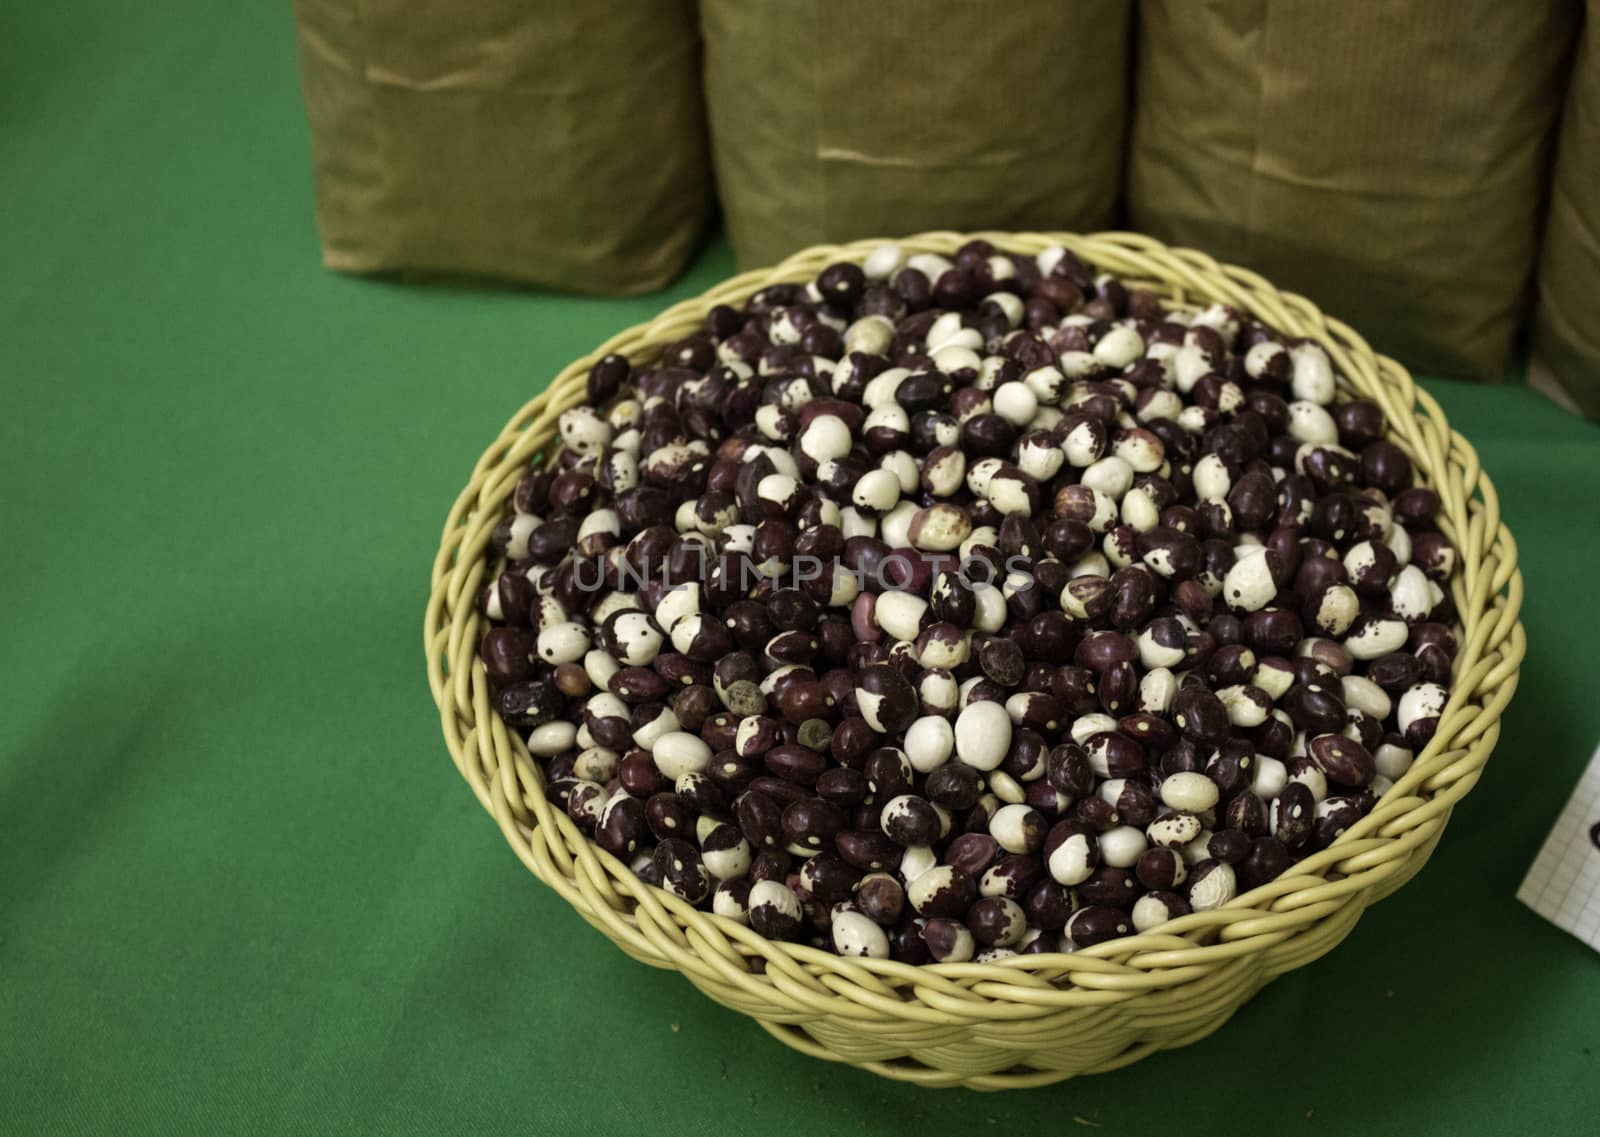 White beans in a market by celiafoto